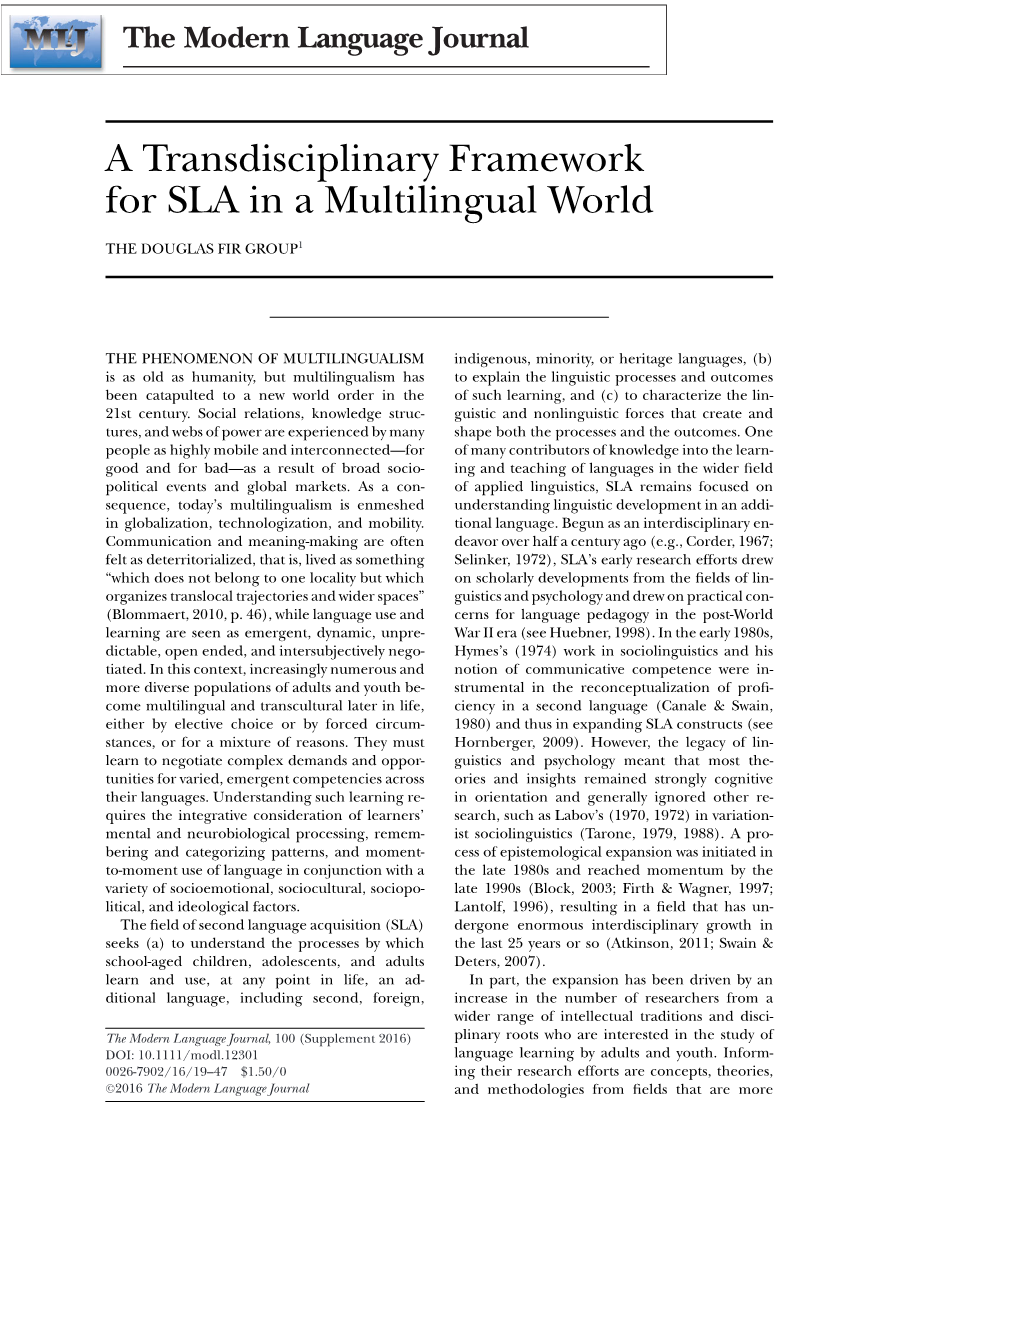 A Transdisciplinary Framework for SLA in a Multilingual World